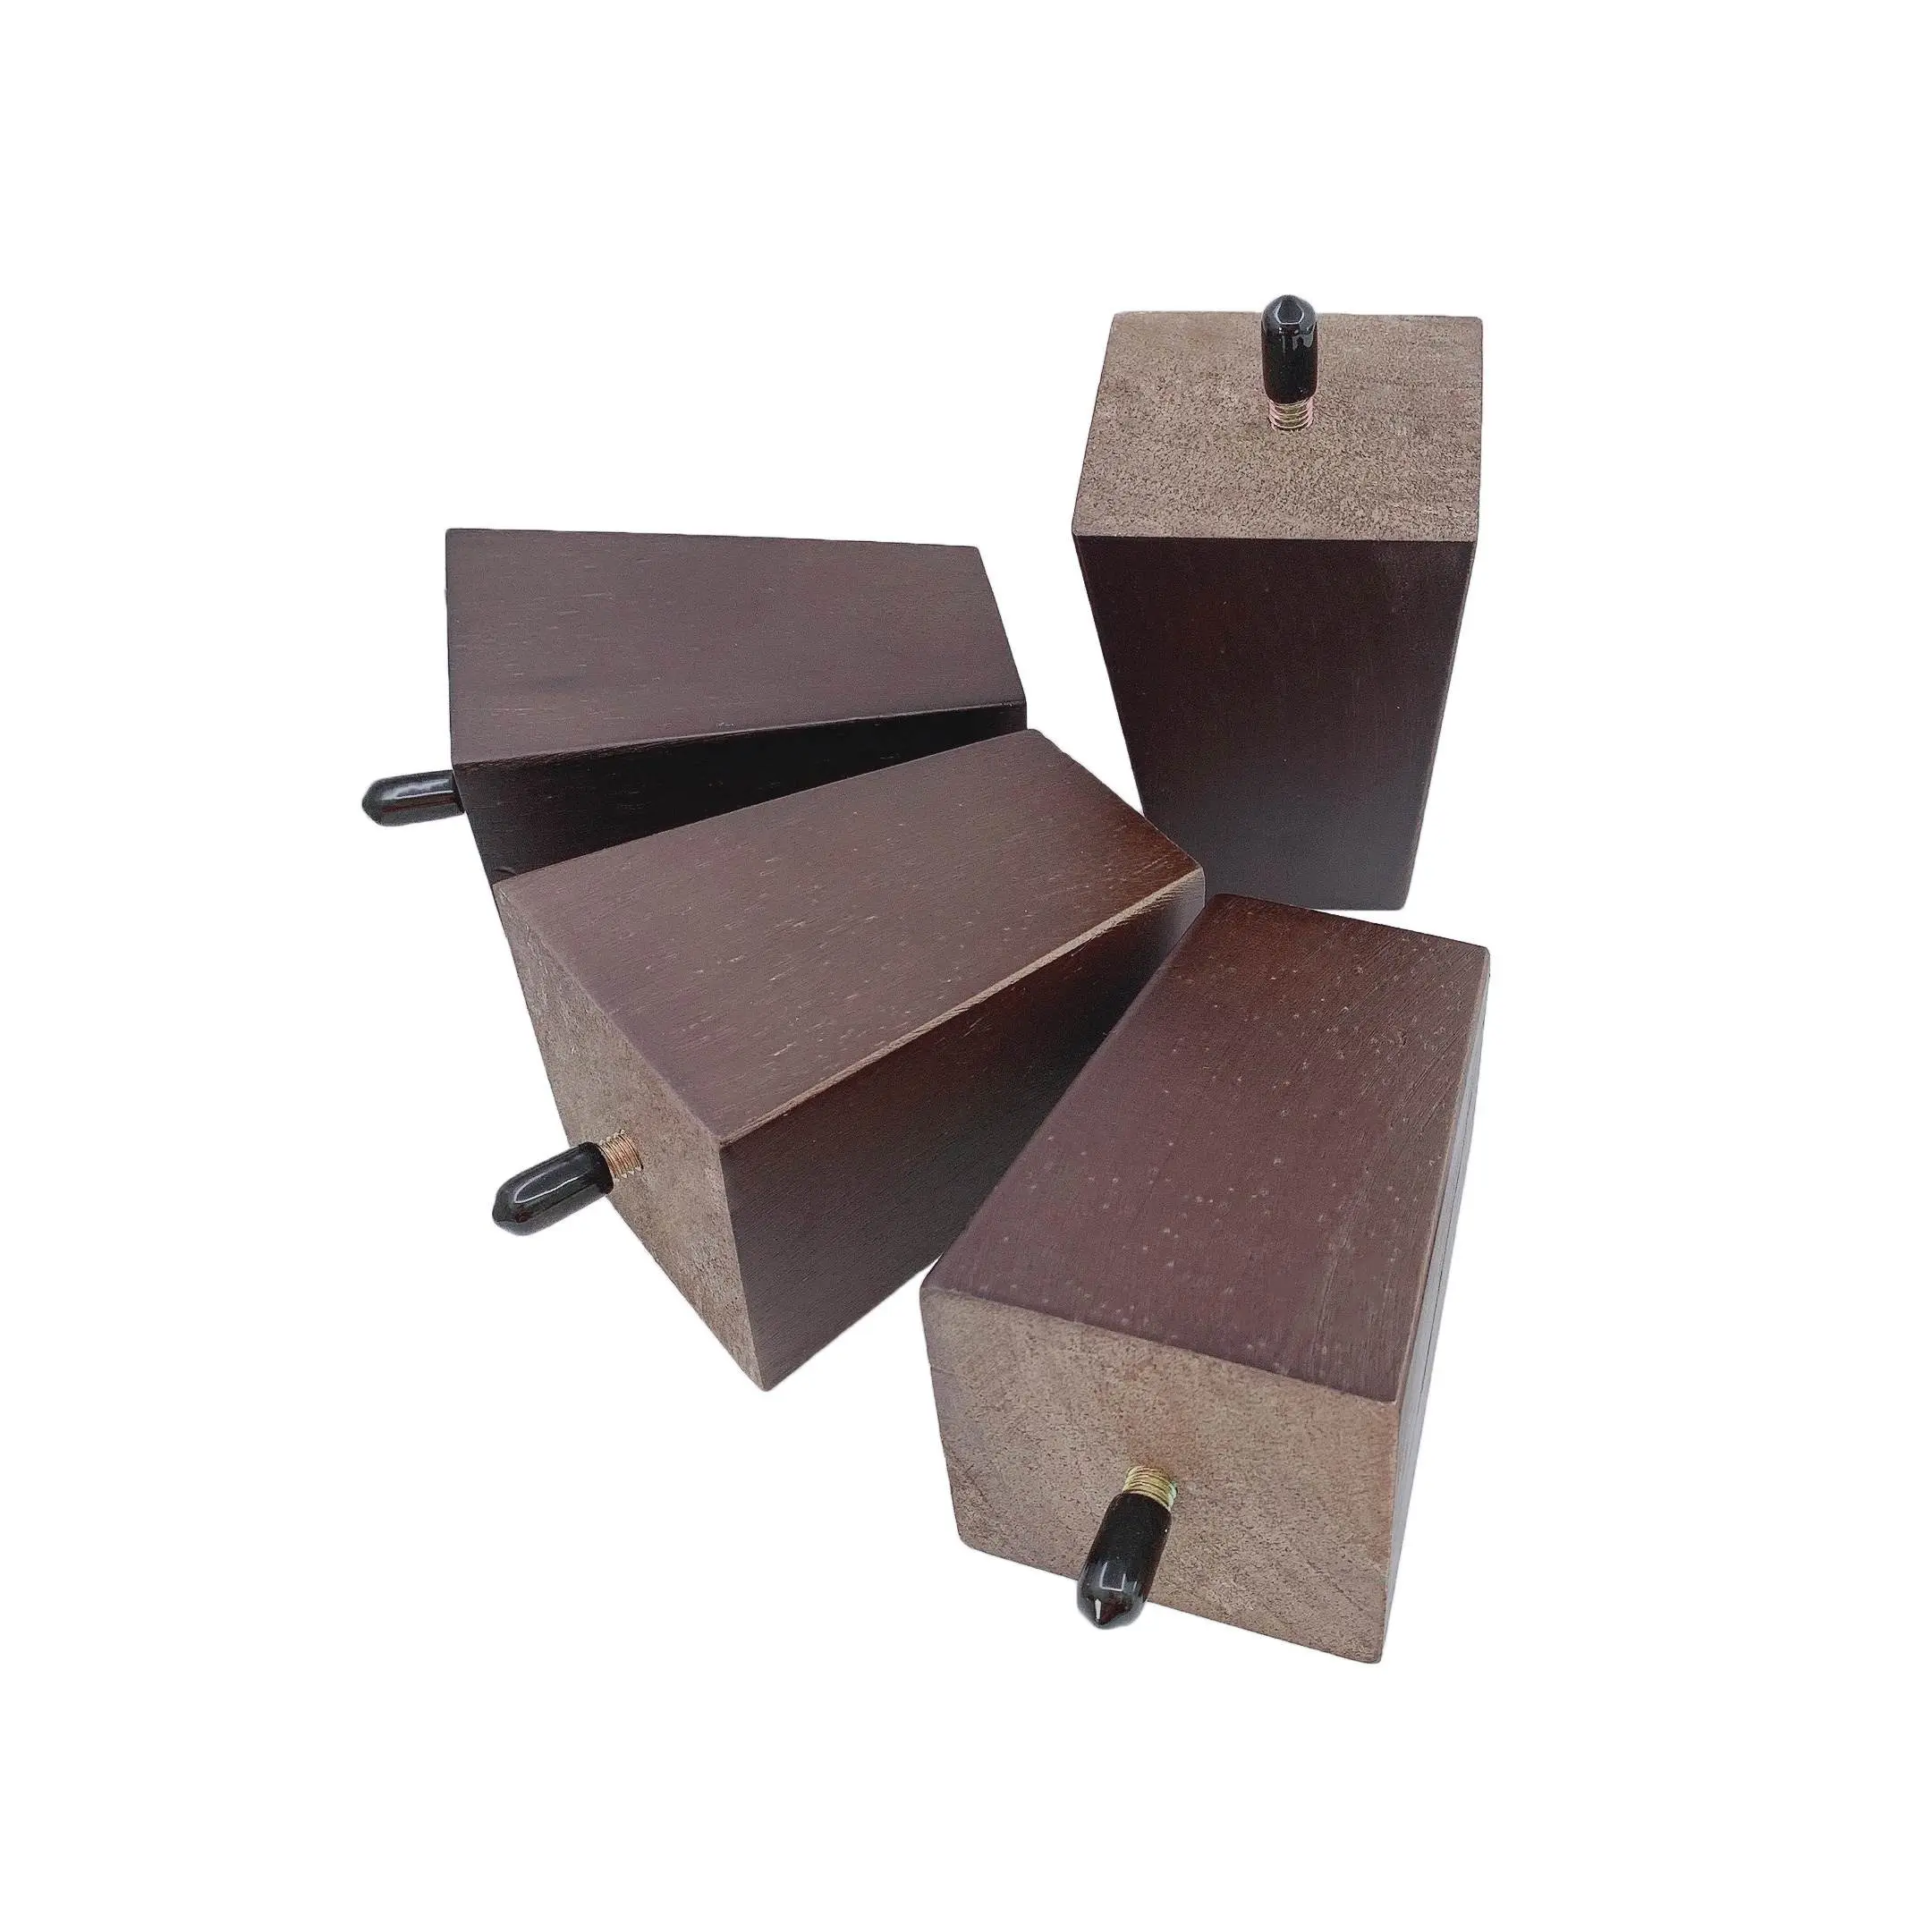 Amazon Hot Selling 3 4 5 6 Zoll Walnuss braun schwarz Ersatz gummi Quadrat Holz Möbel Sofa Beine